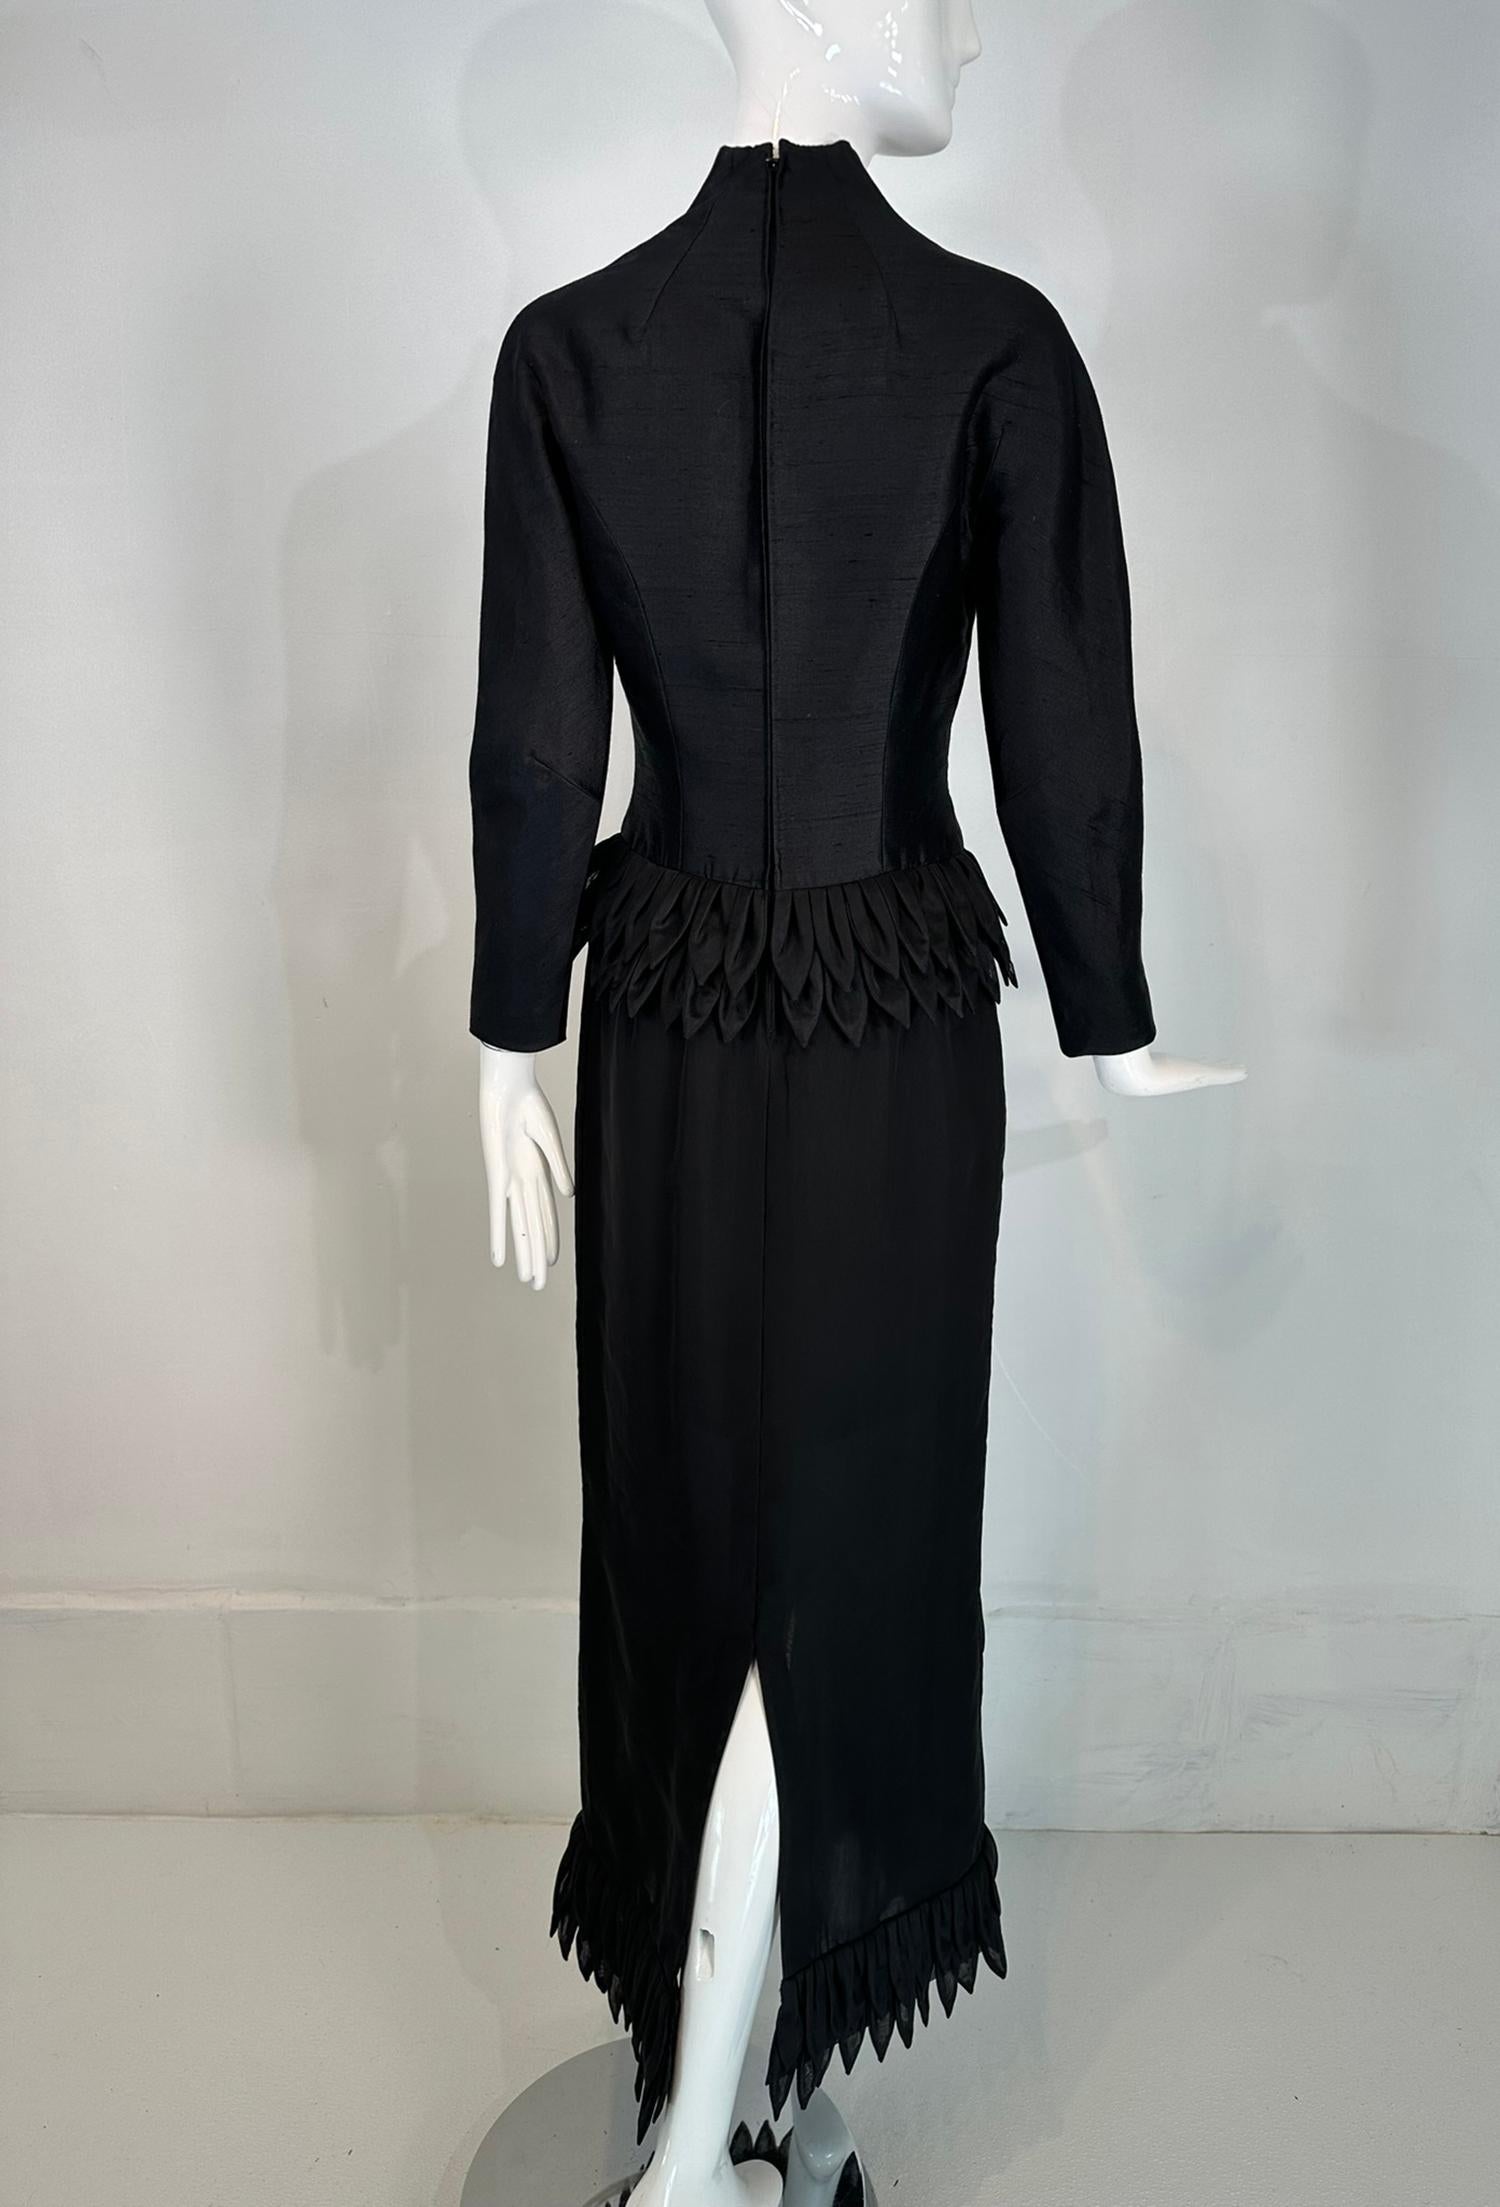 Vinchi Demi Couture Black Silk Hand Rolled Petal Evening Dress 1960s Hong Kong For Sale 4